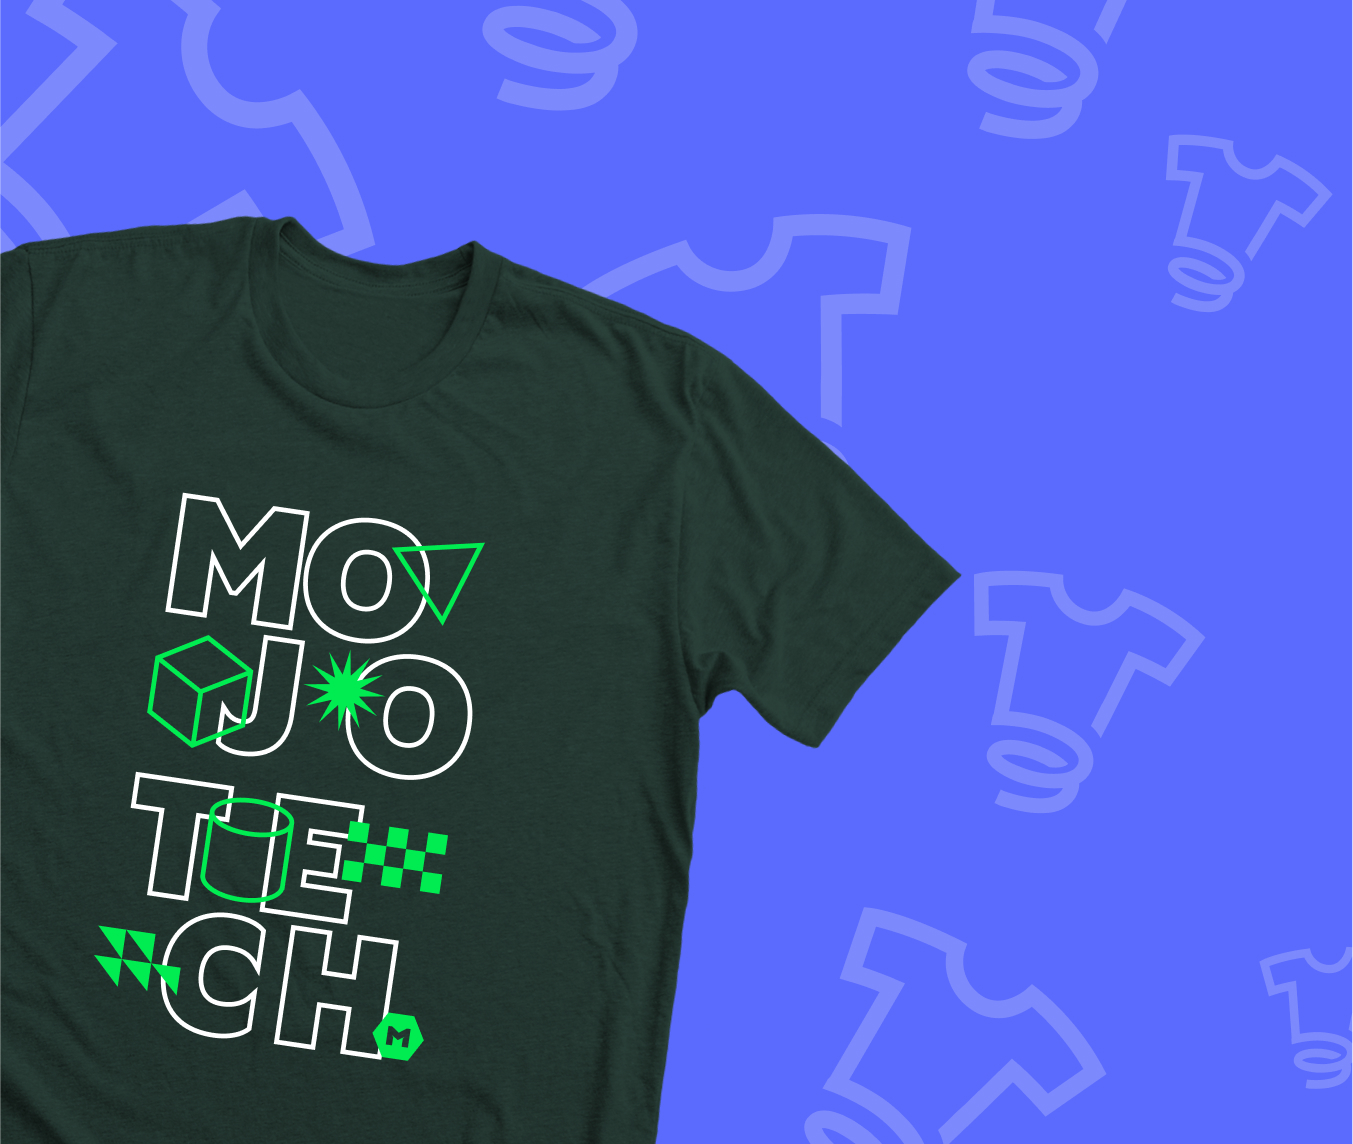 Custom t-shirt with MojoTech on it.